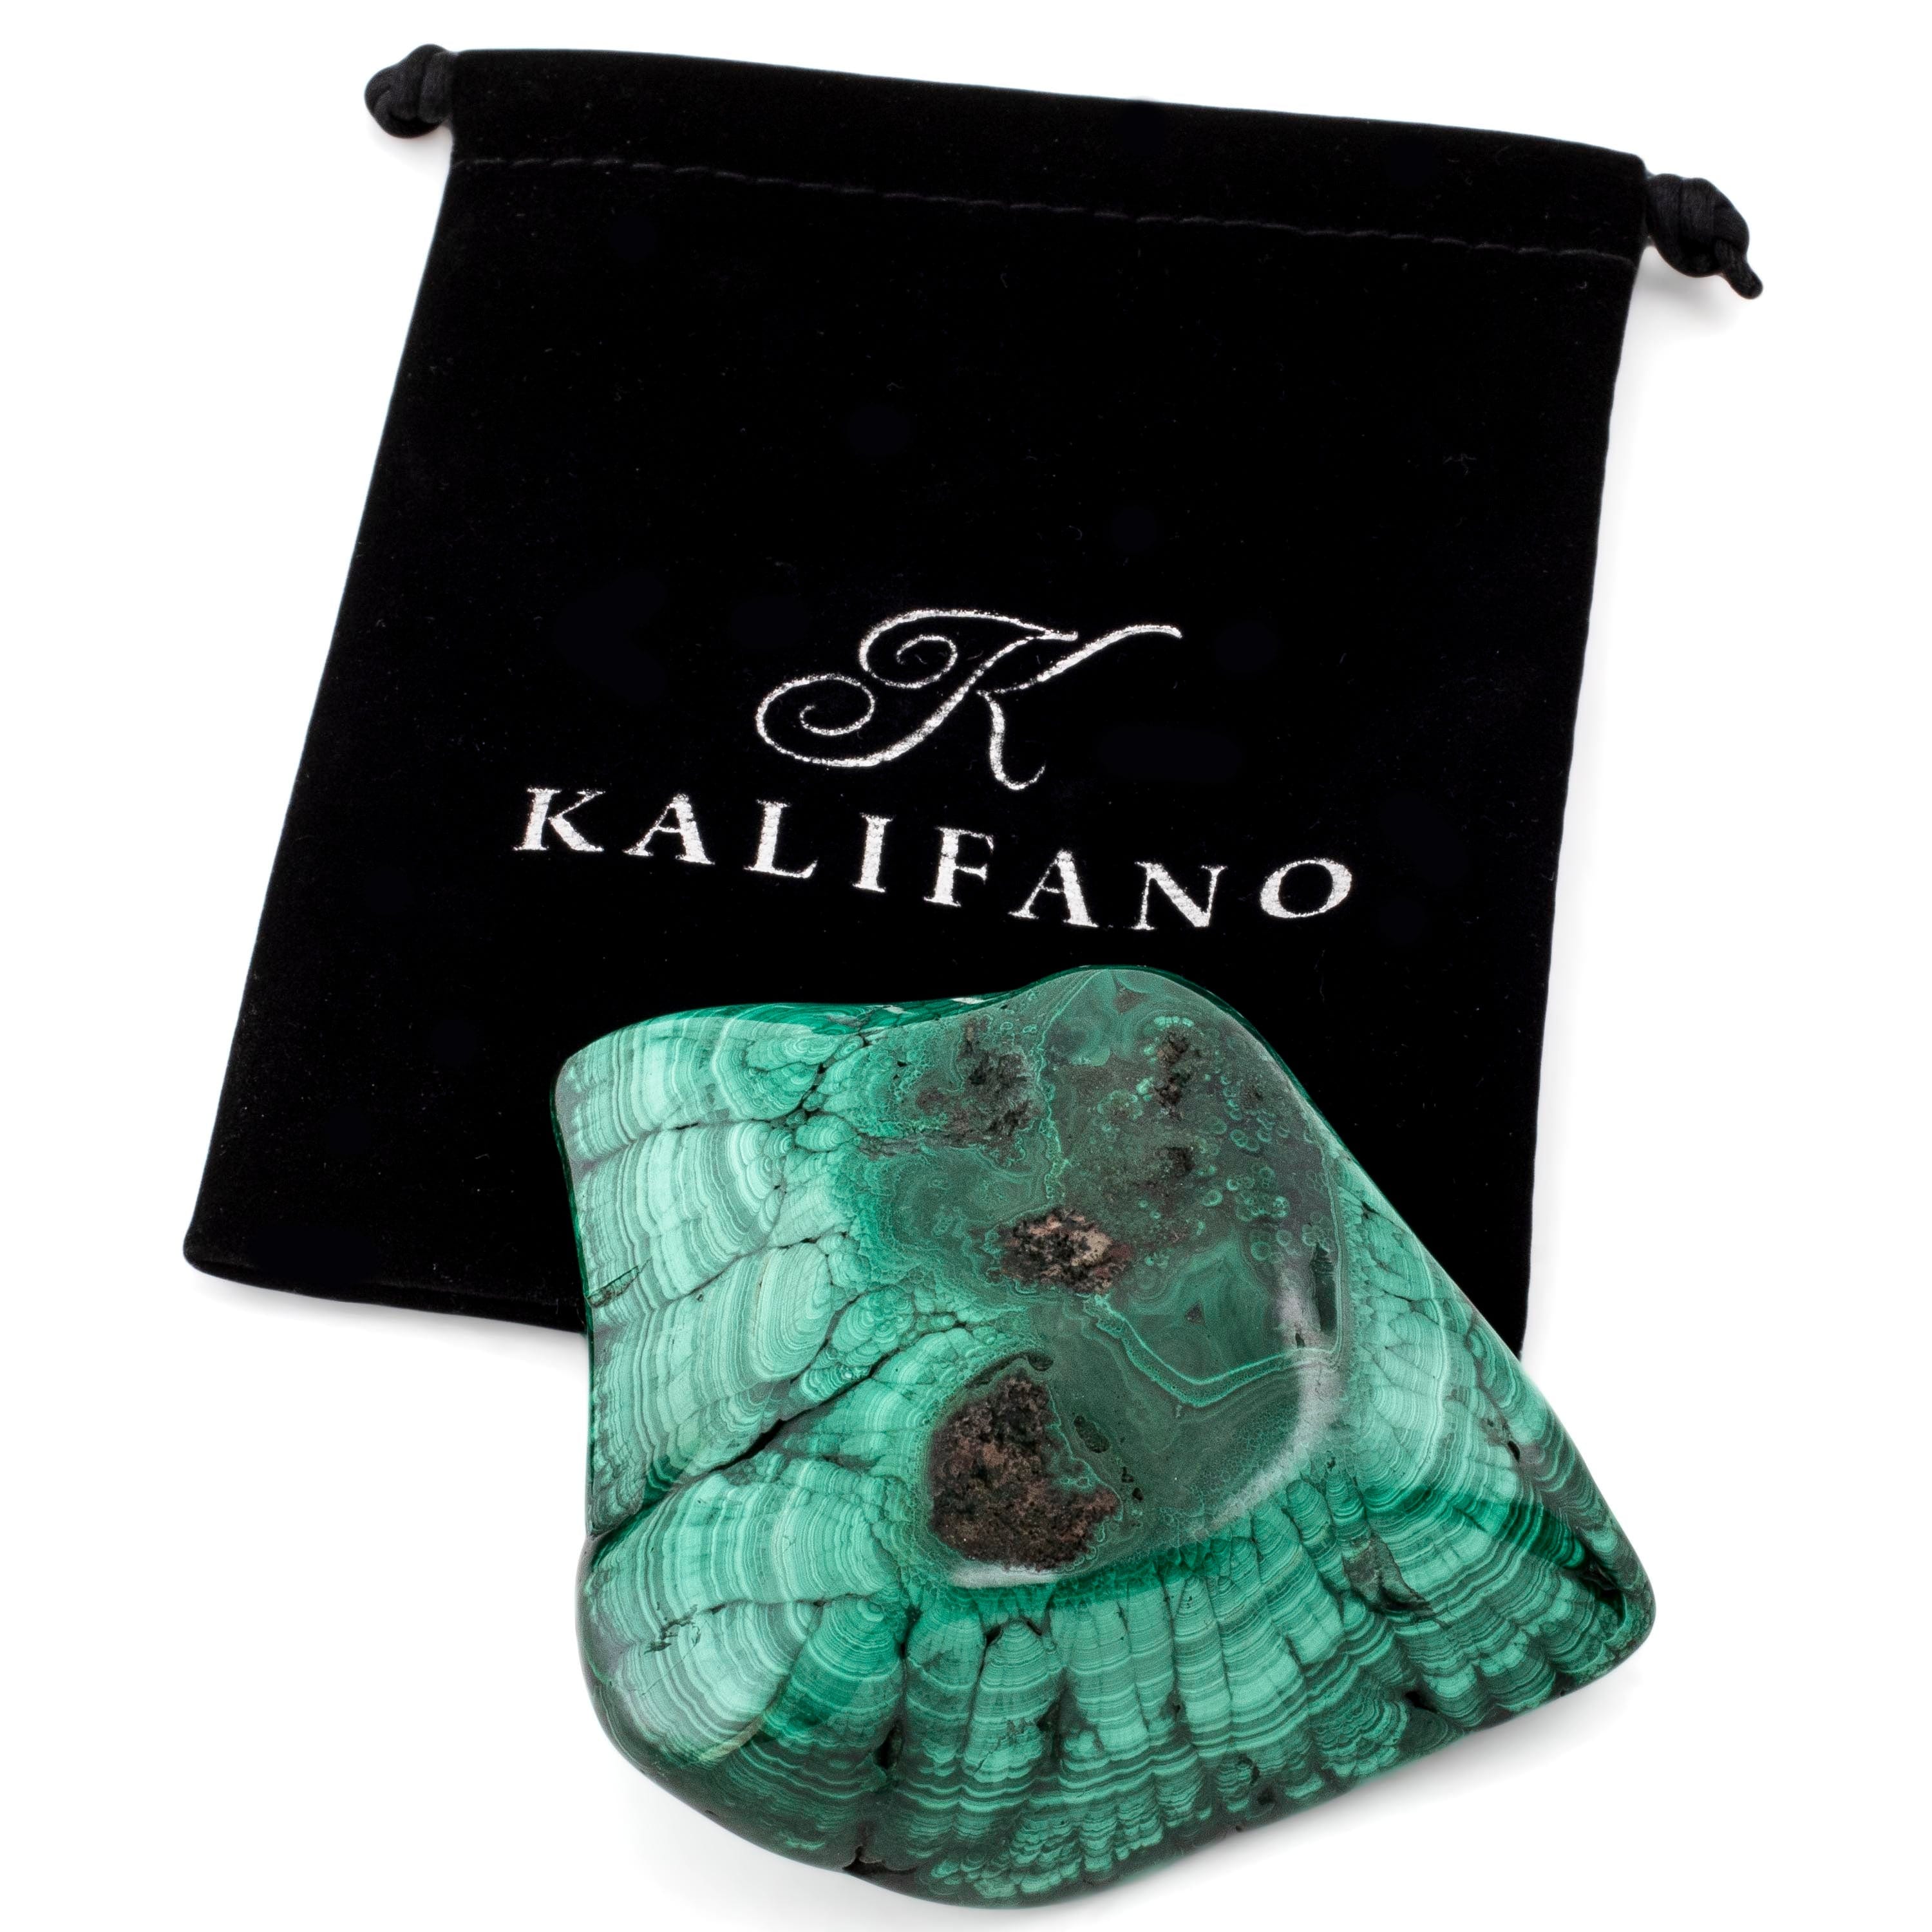 Kalifano Malachite Natural Malachite Freeform From Congo - 3.5" / 275g MA320